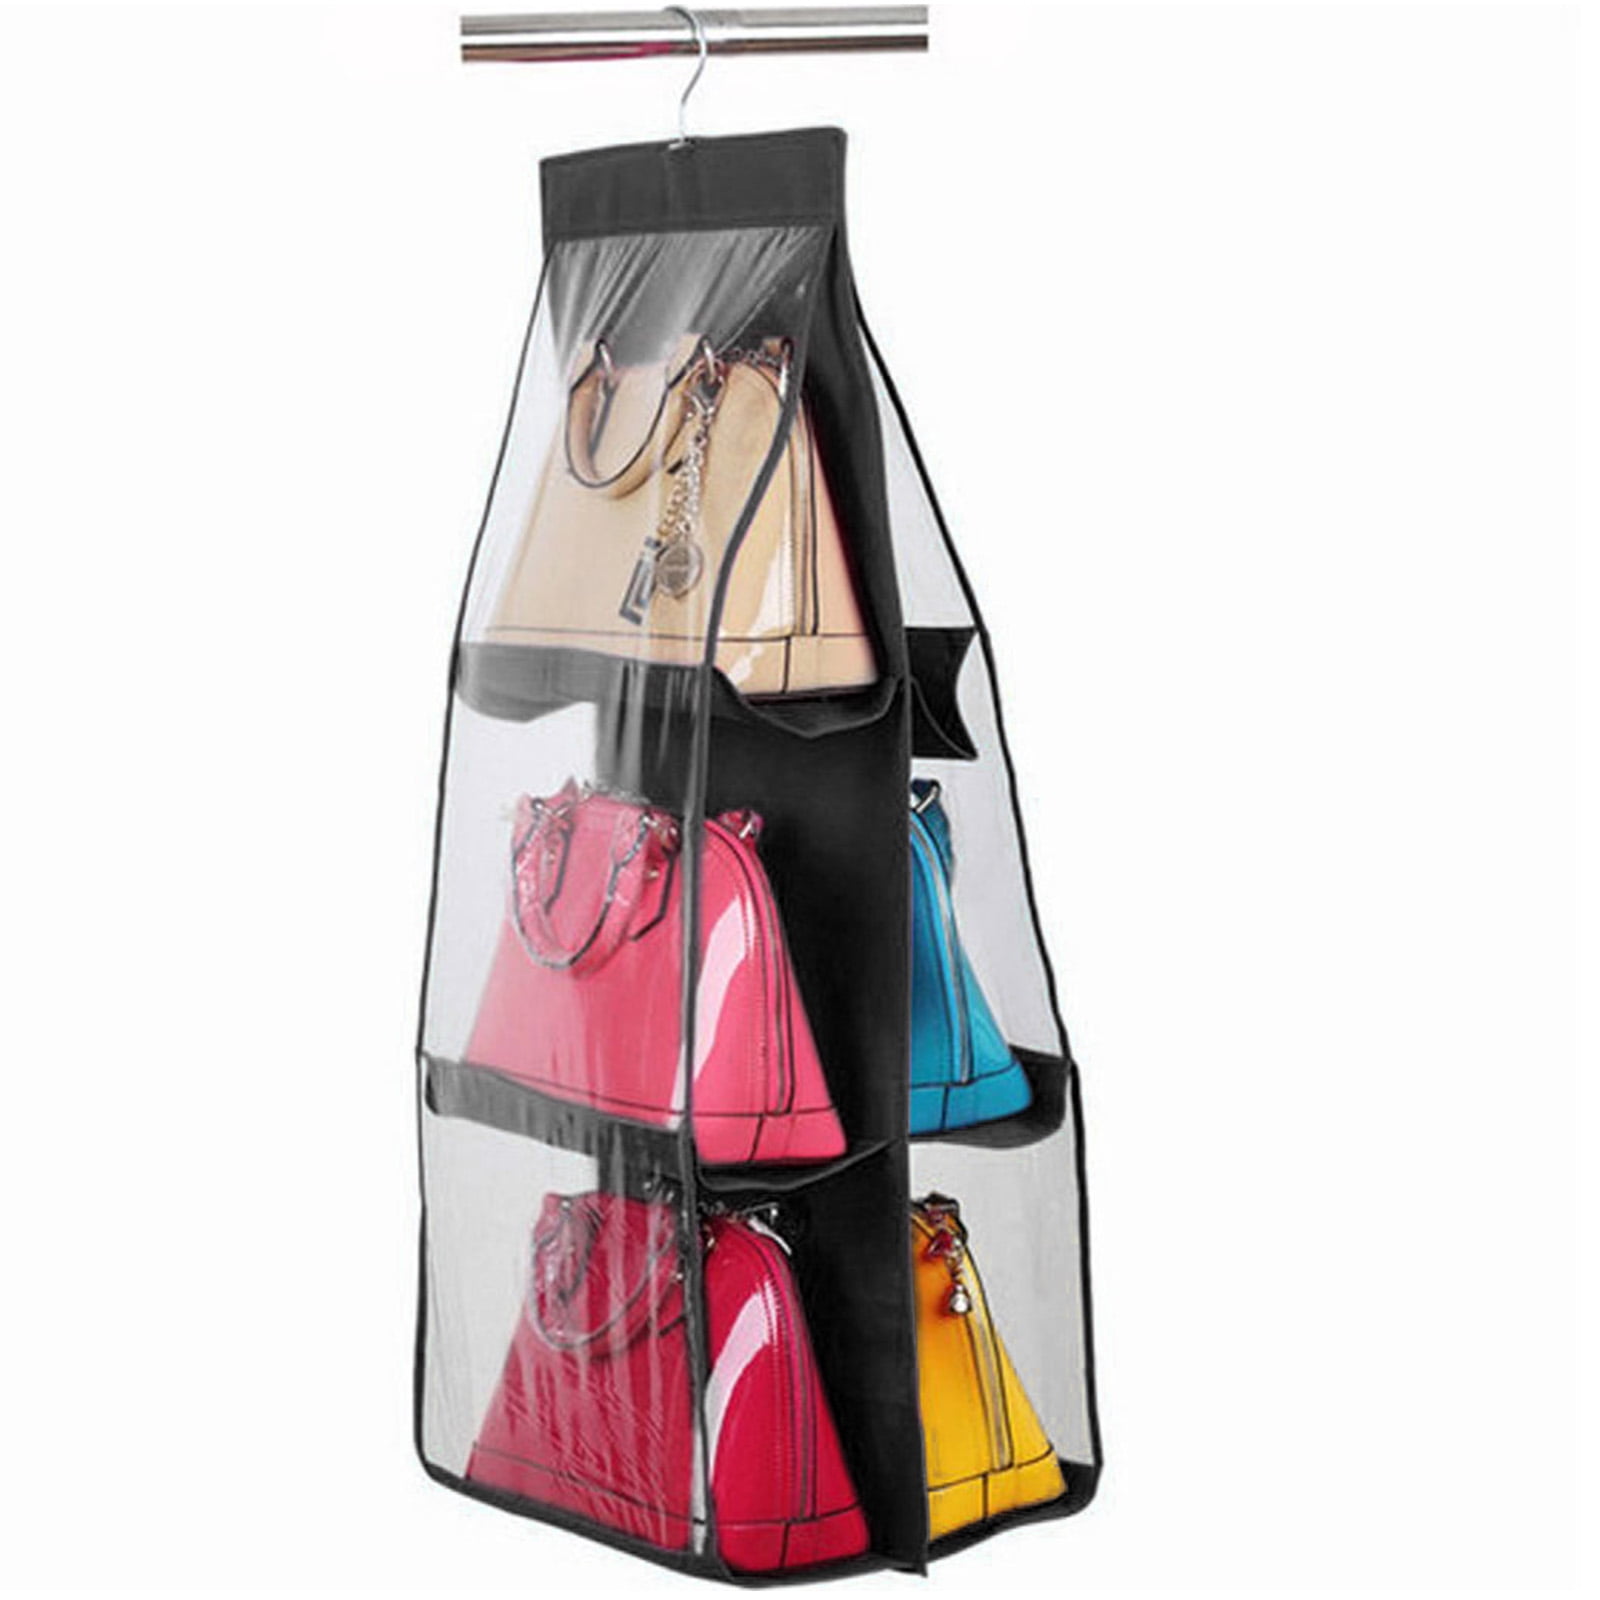 6-Pockets Handbag Storage Organizer Anti-dust Cover Large Clear Bag Purse Hanging Closet Rack ...